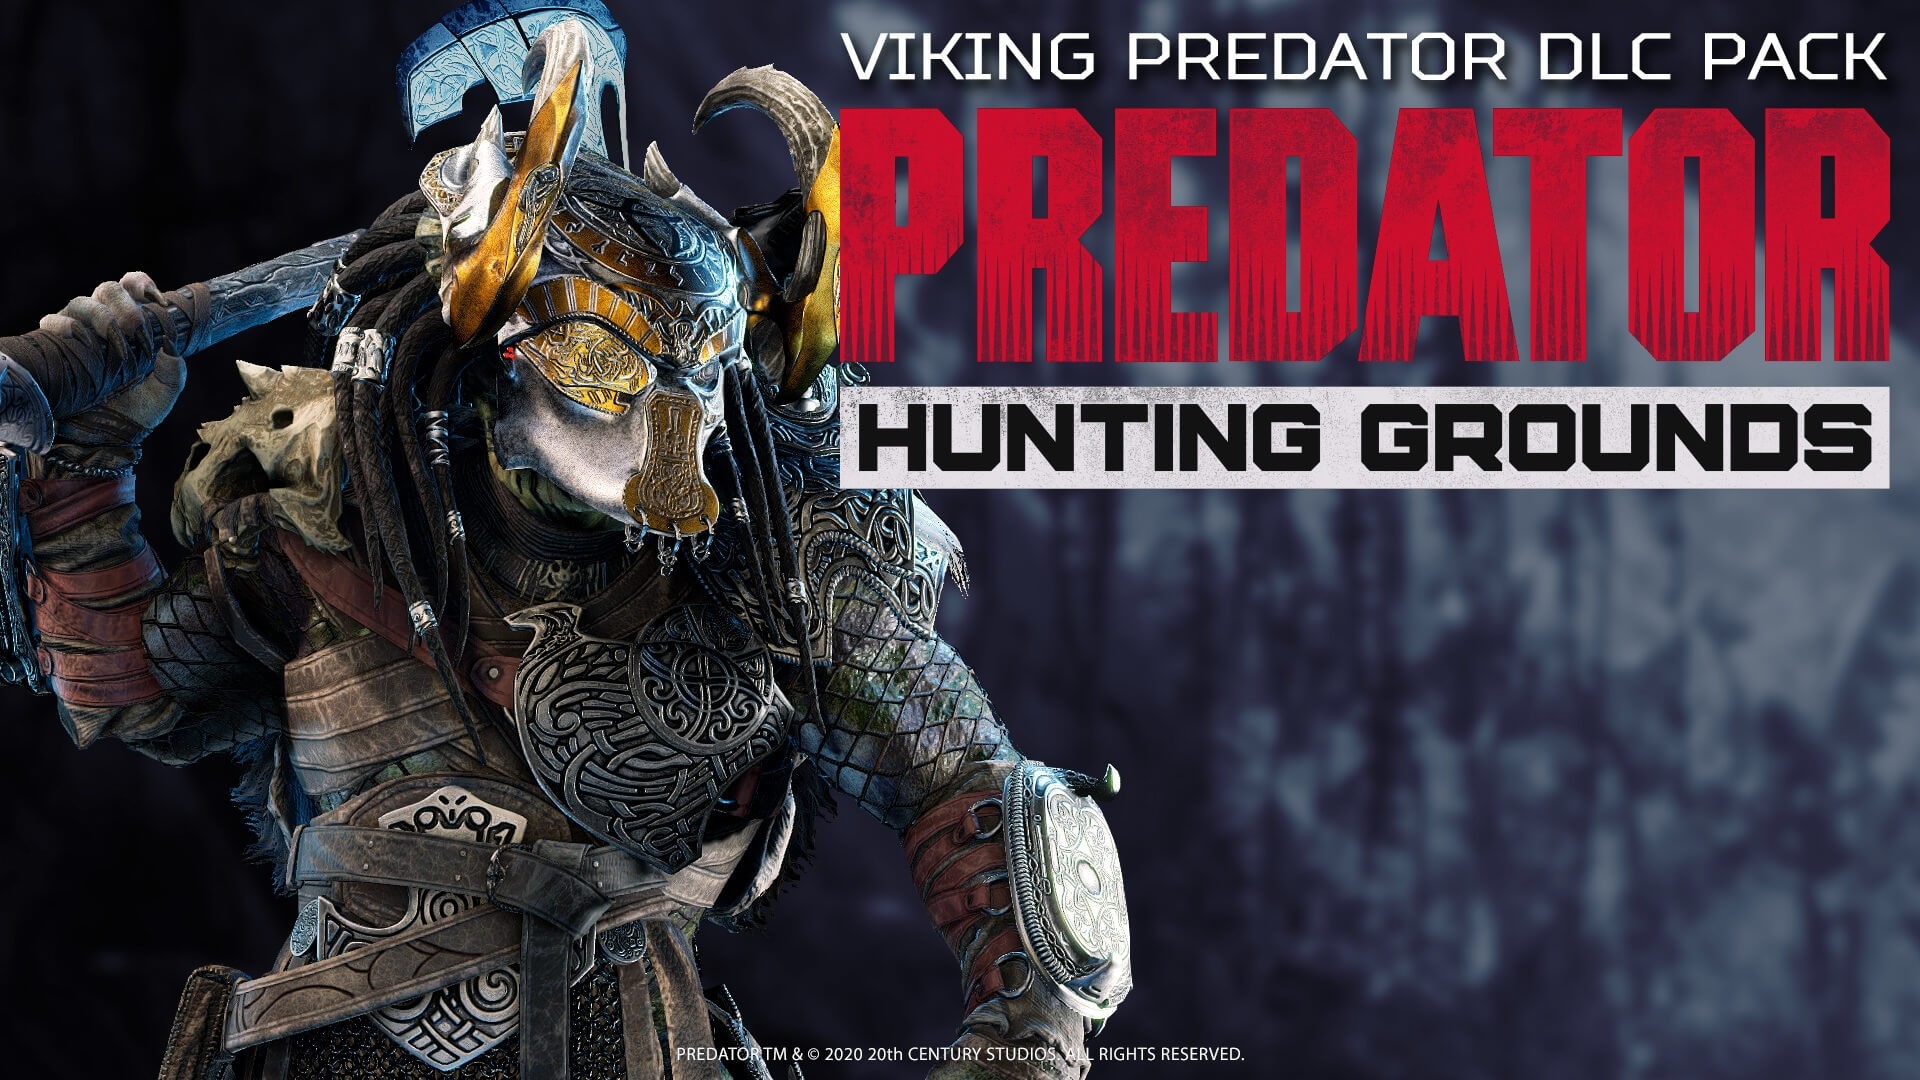 [$ 2.05] Predator: Hunting Grounds - Viking Predator DLC Pack Steam CD Key